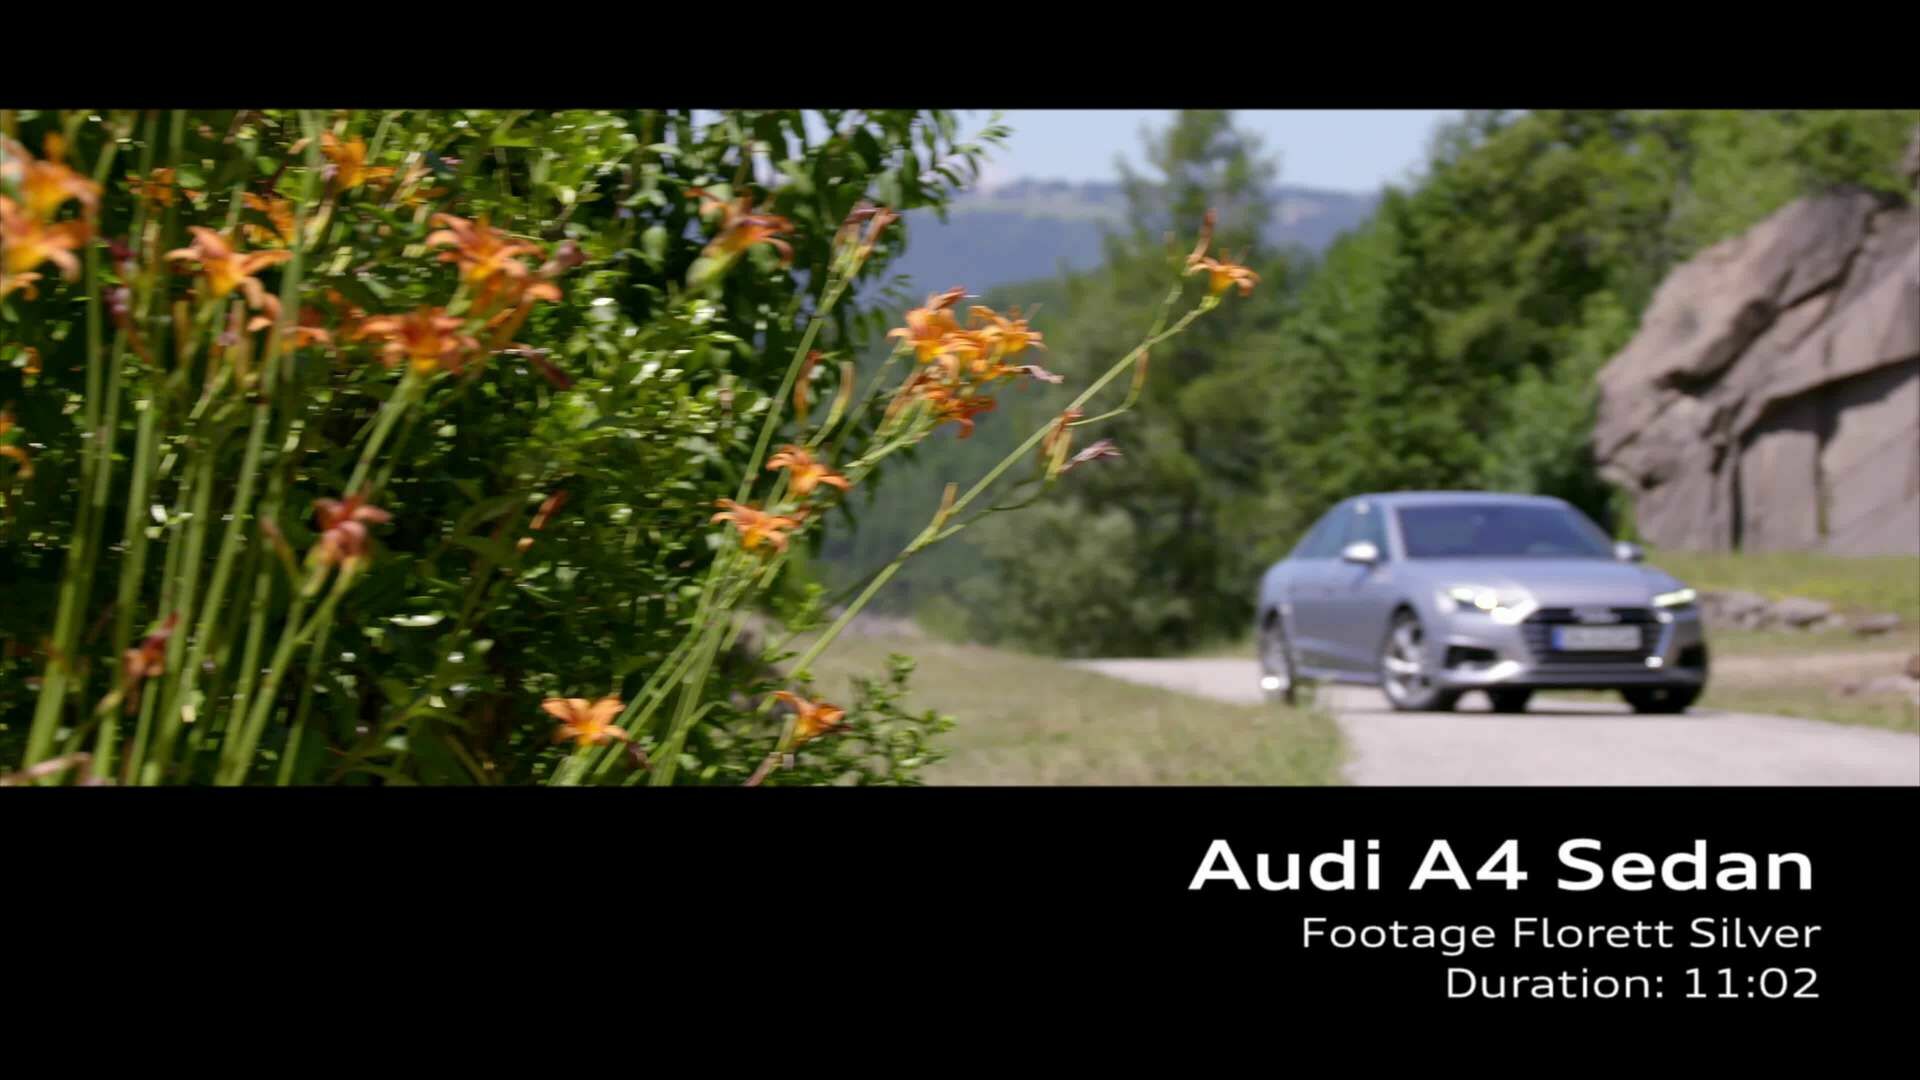 Audi A4 Sedan TFSI Florett Silver (footage)